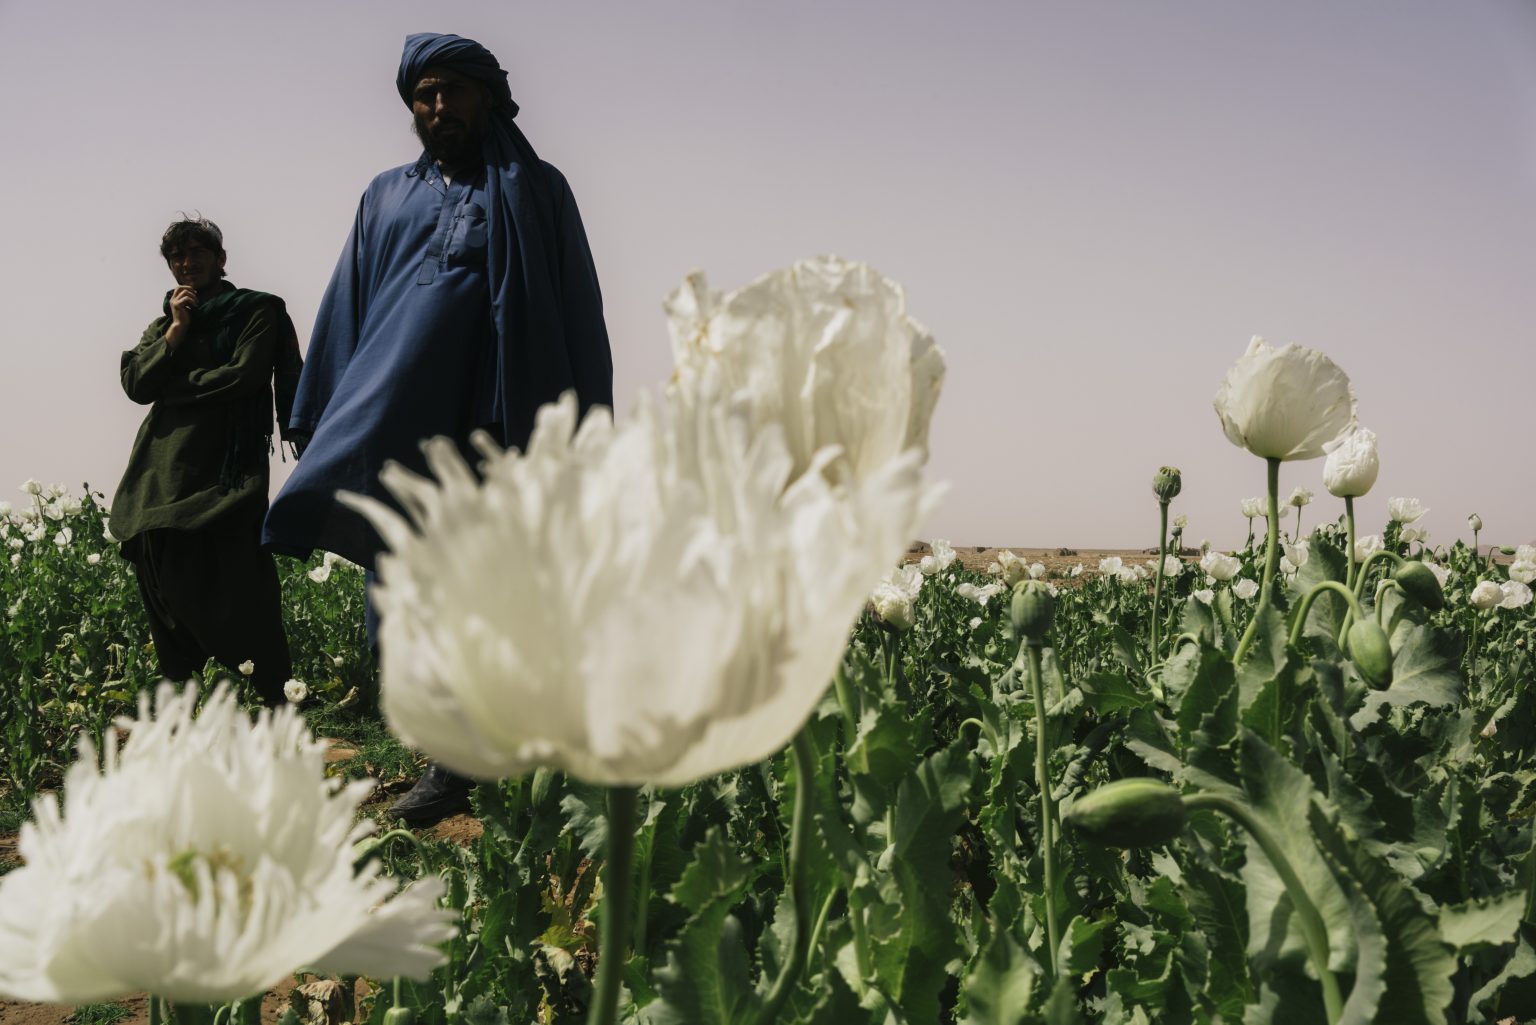 Farah Province, Afghanistan, March 2022 - Farmers stand on their opium field. ><
Provincia di Farah, Afghanistan, marzo 2022 - Agricoltori nel loro campo di oppio